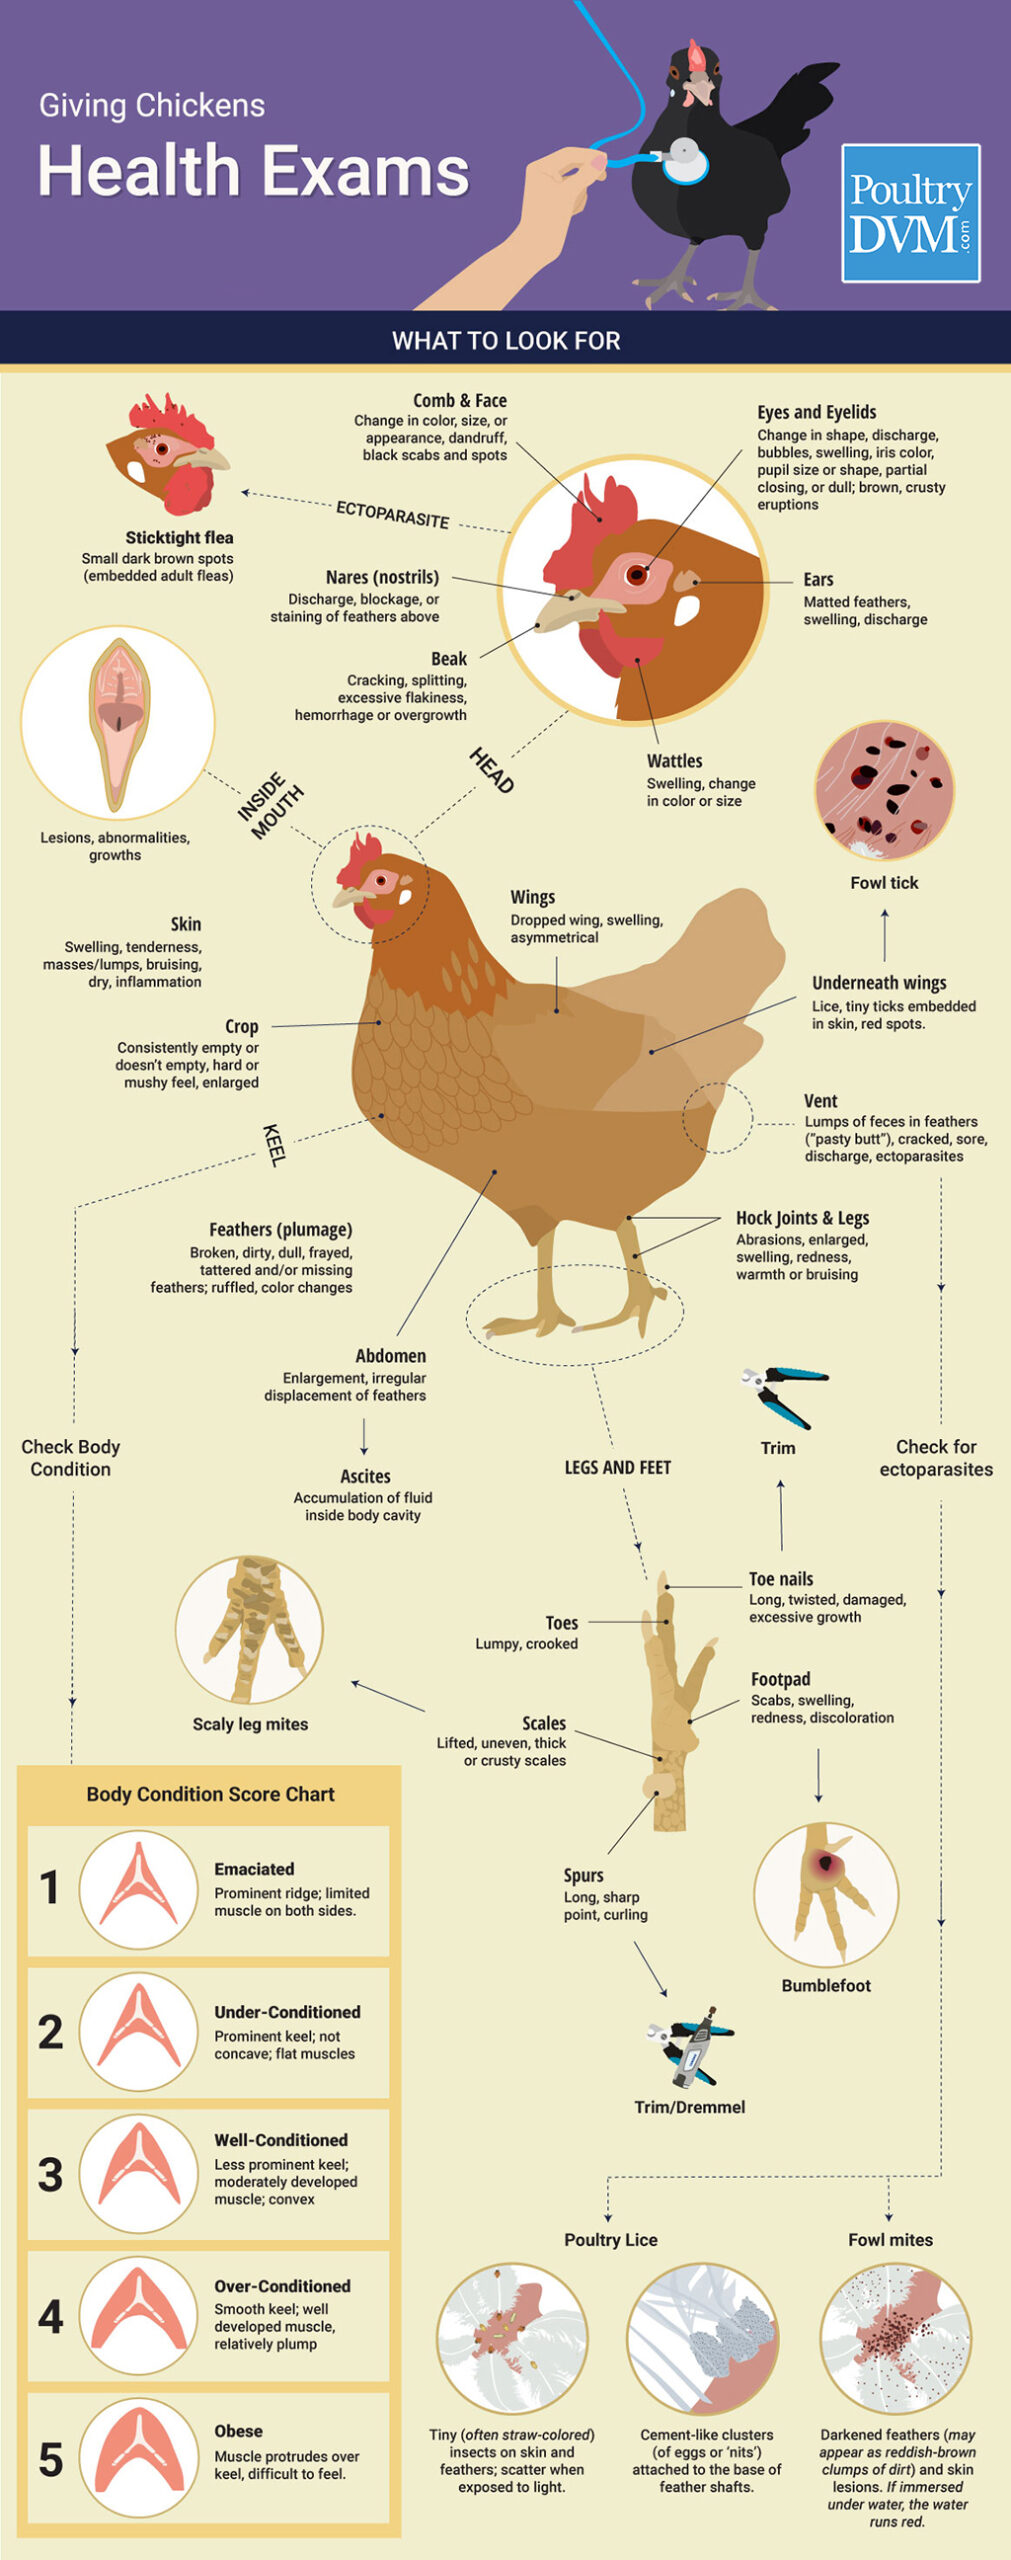 Examining a Sick Chicken